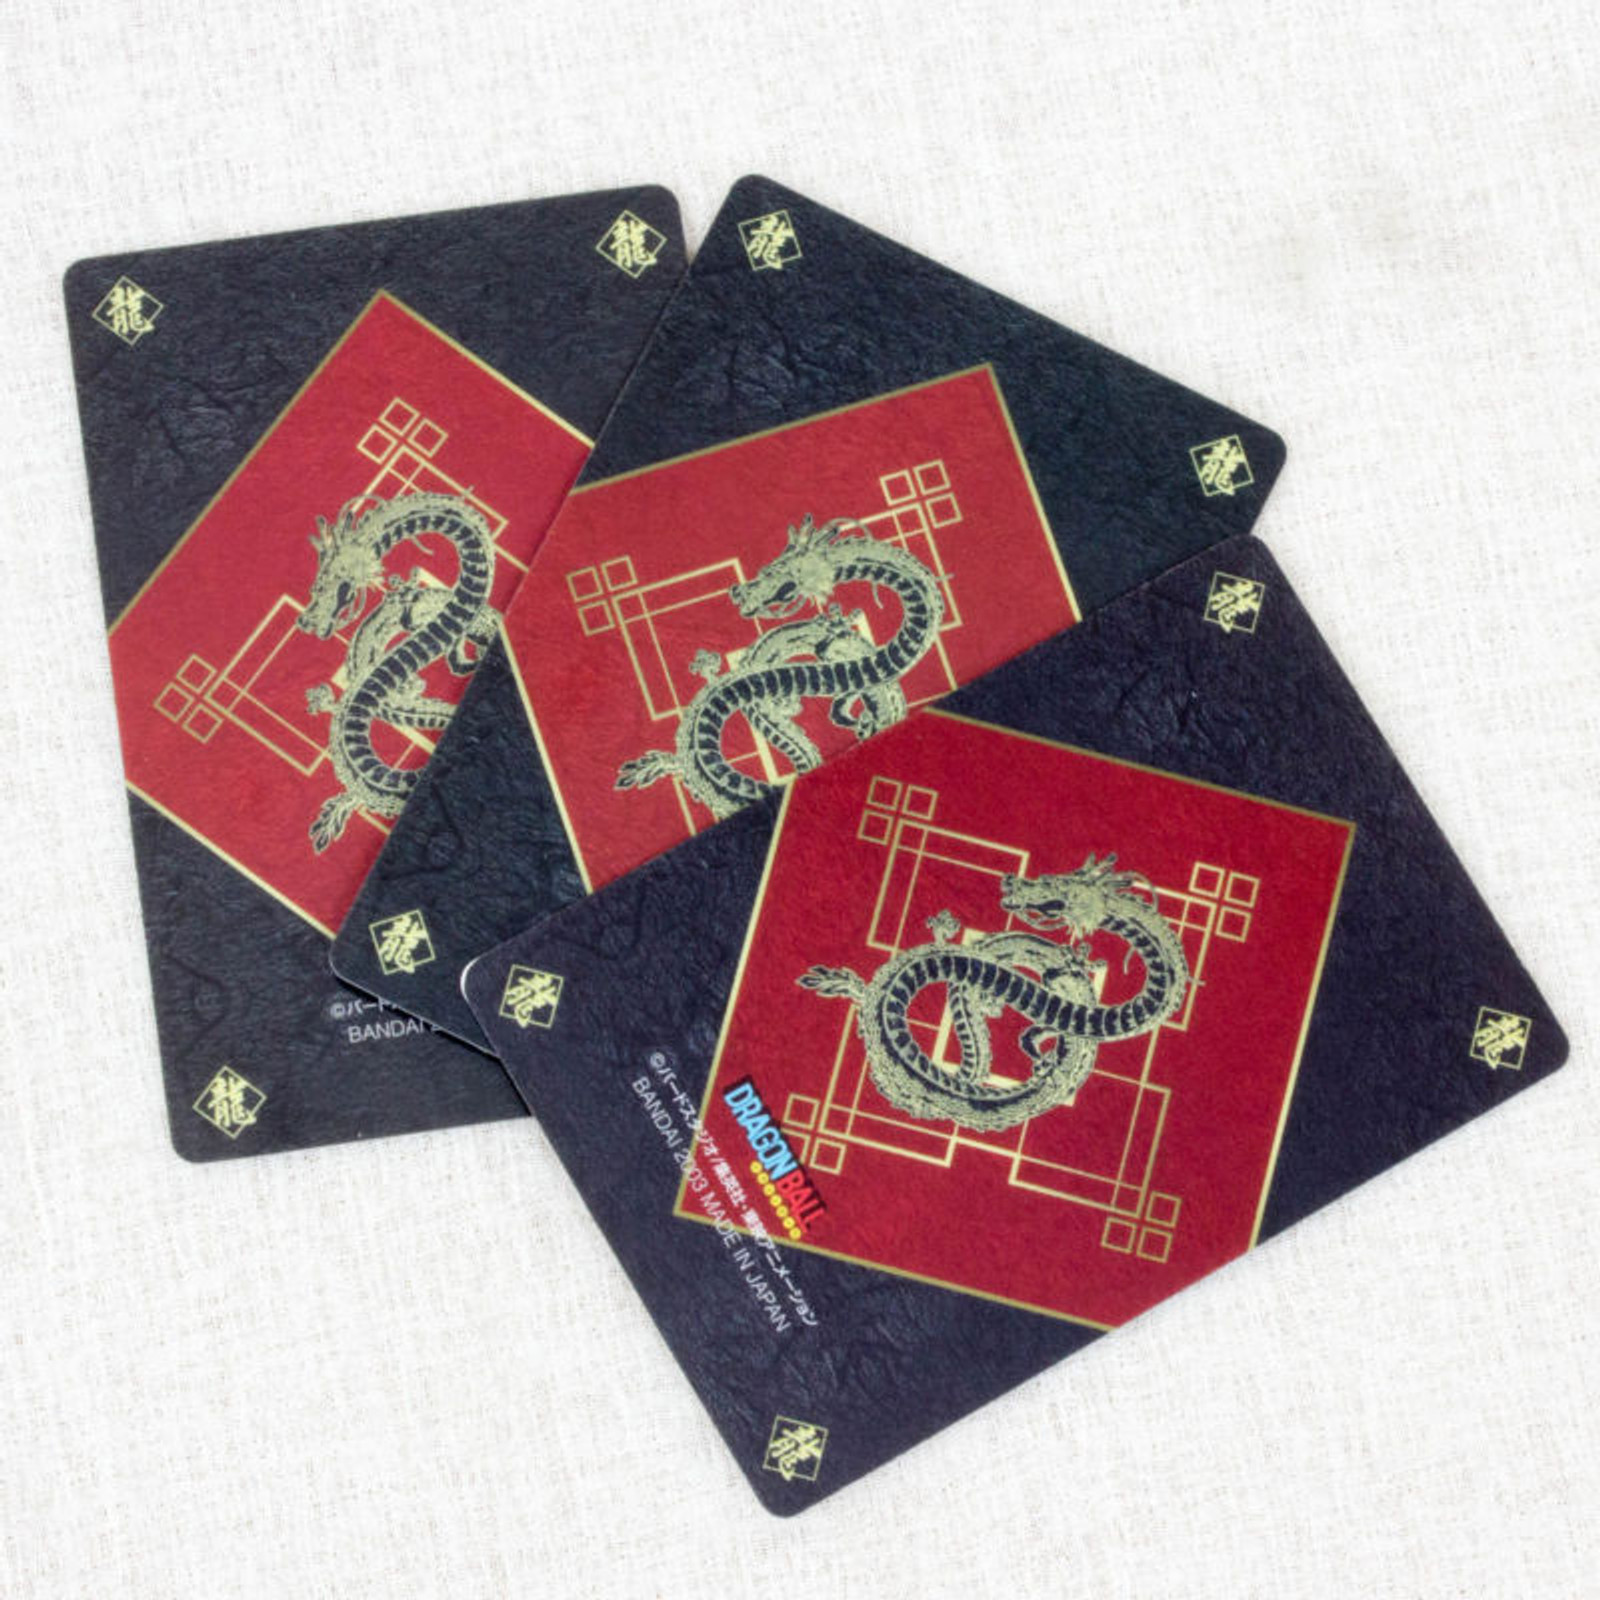 Dragon Ball Plastic Card 3pc + Card Case Bulma Gokou JAPAN ANIME